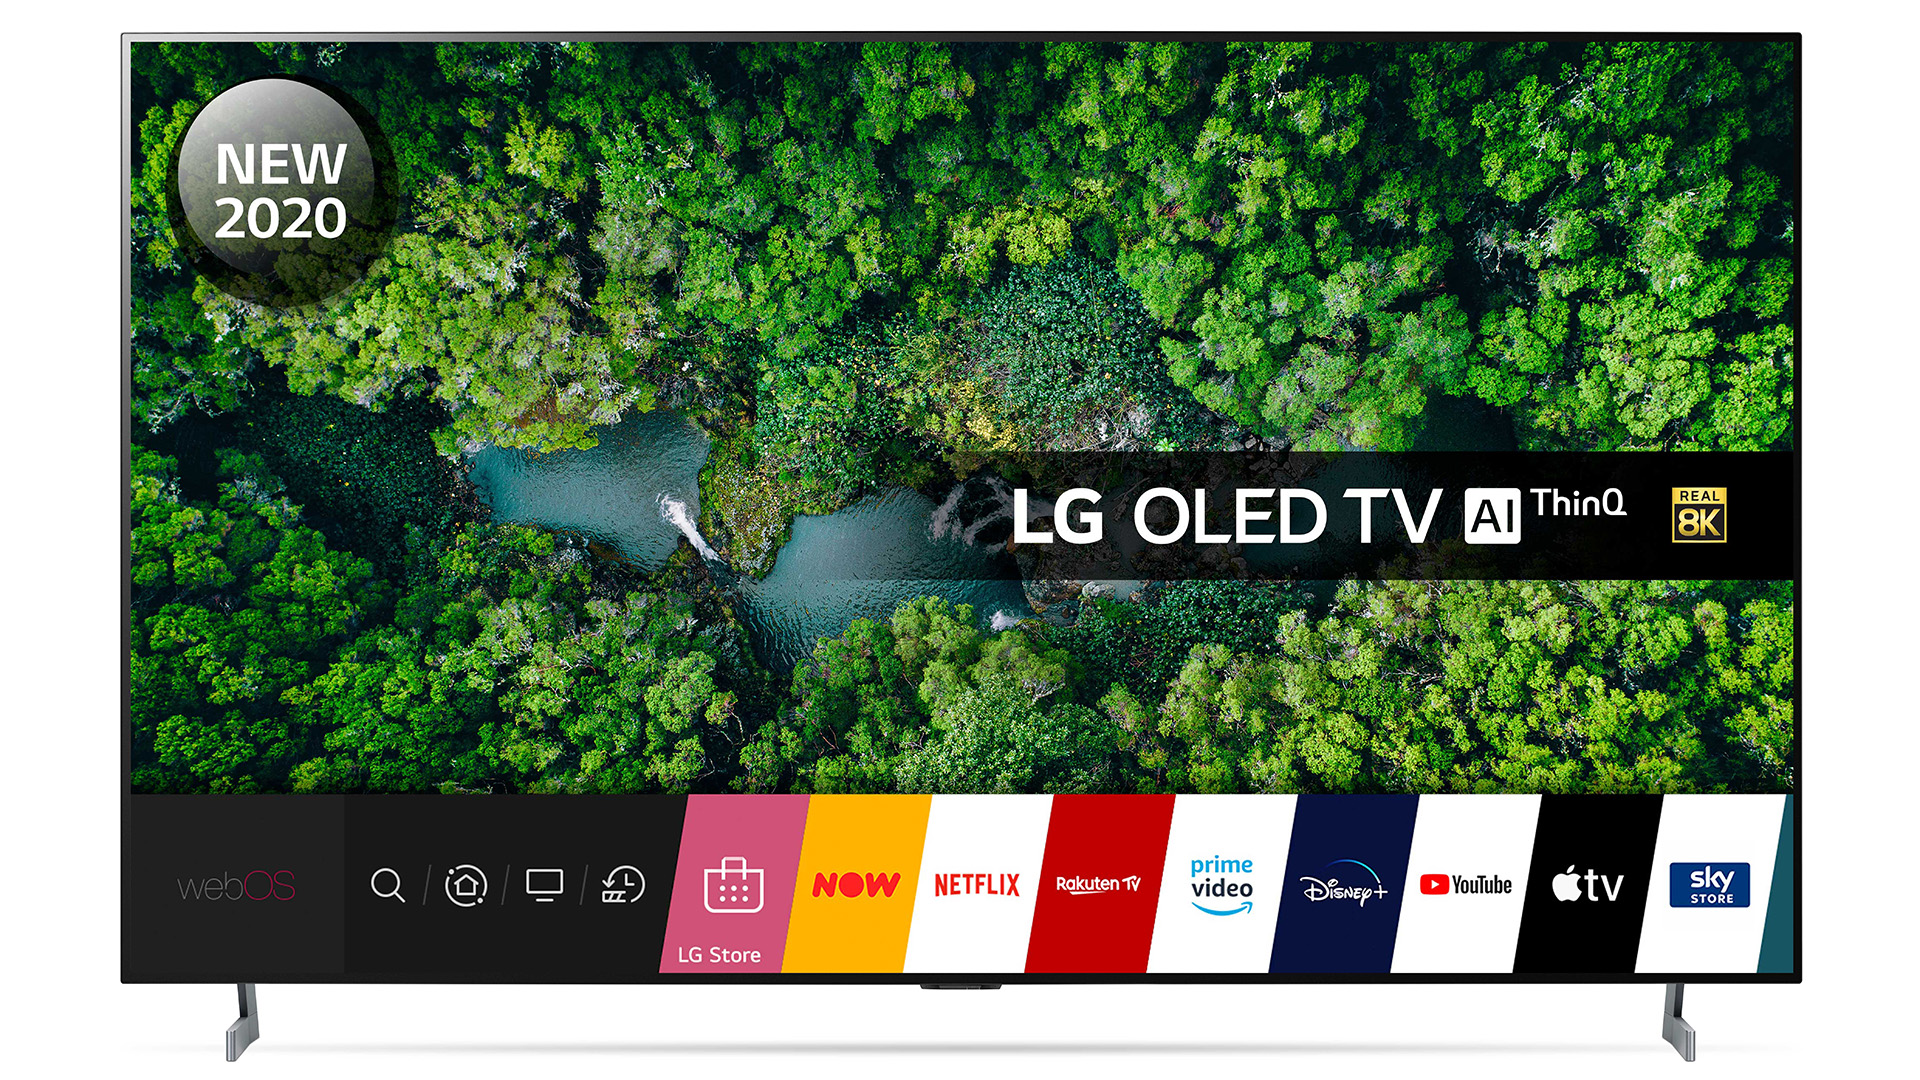 LG 2020 TV lineup: LG OLED 4K, 8K, prices | What Hi-Fi?